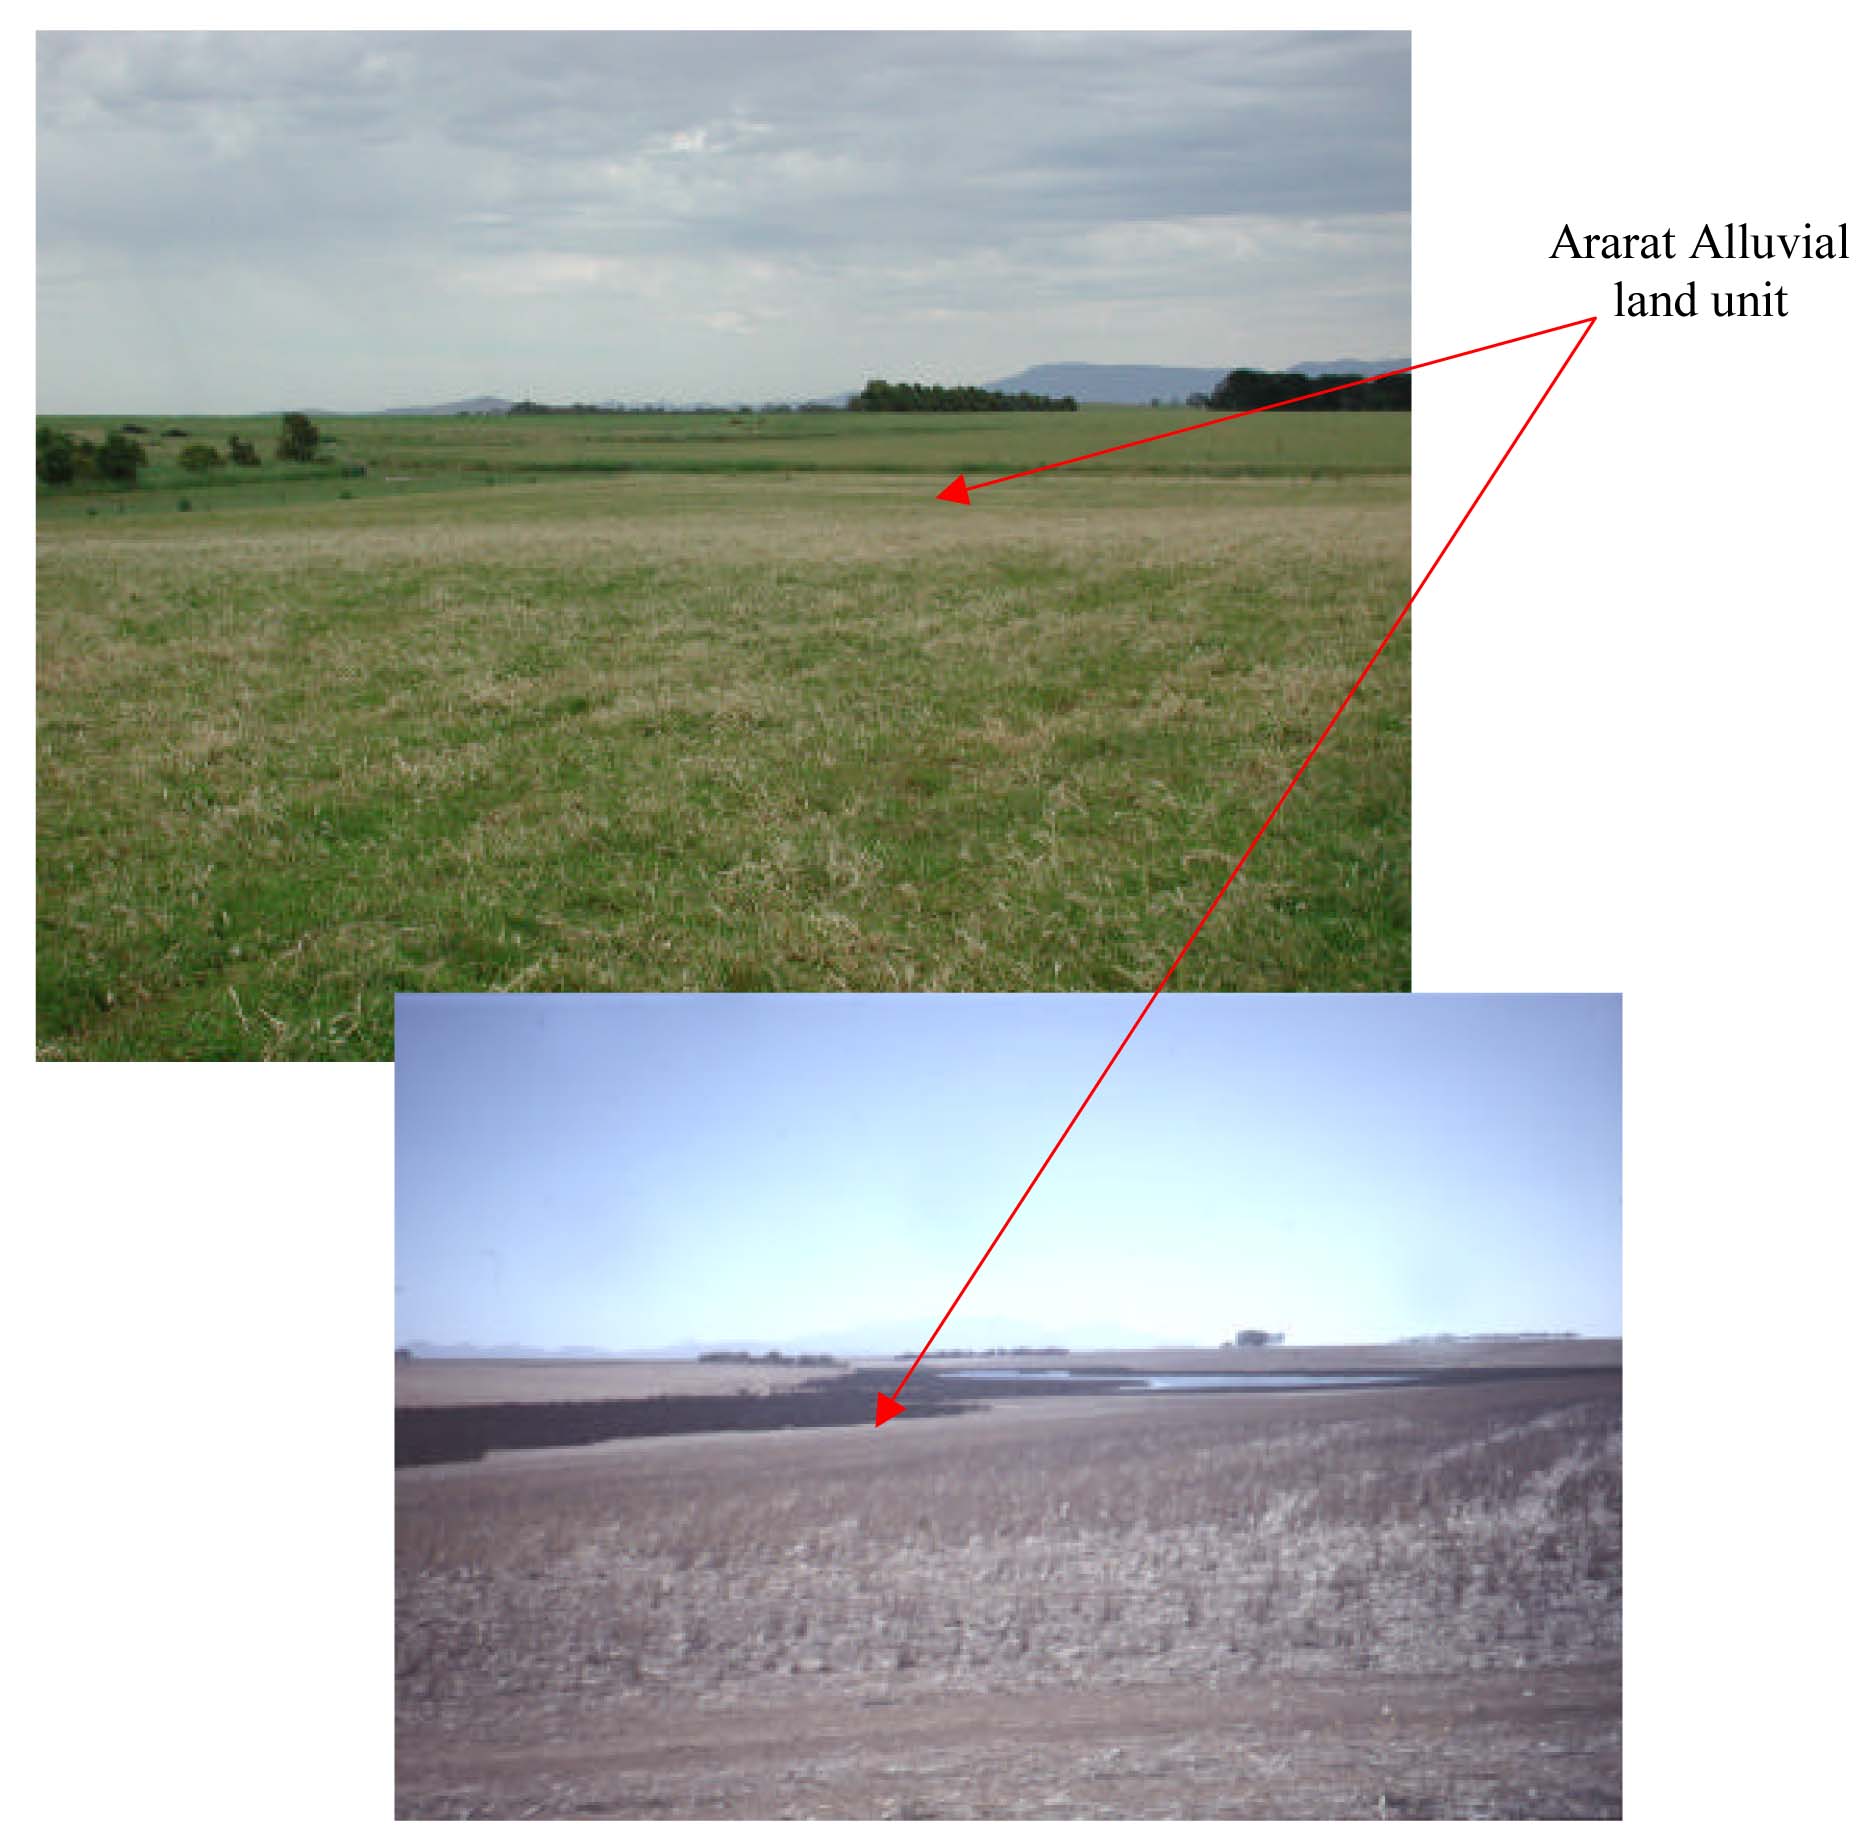 Glenelg Land Resource Assessment - Land Unit System - Ararat alluvial